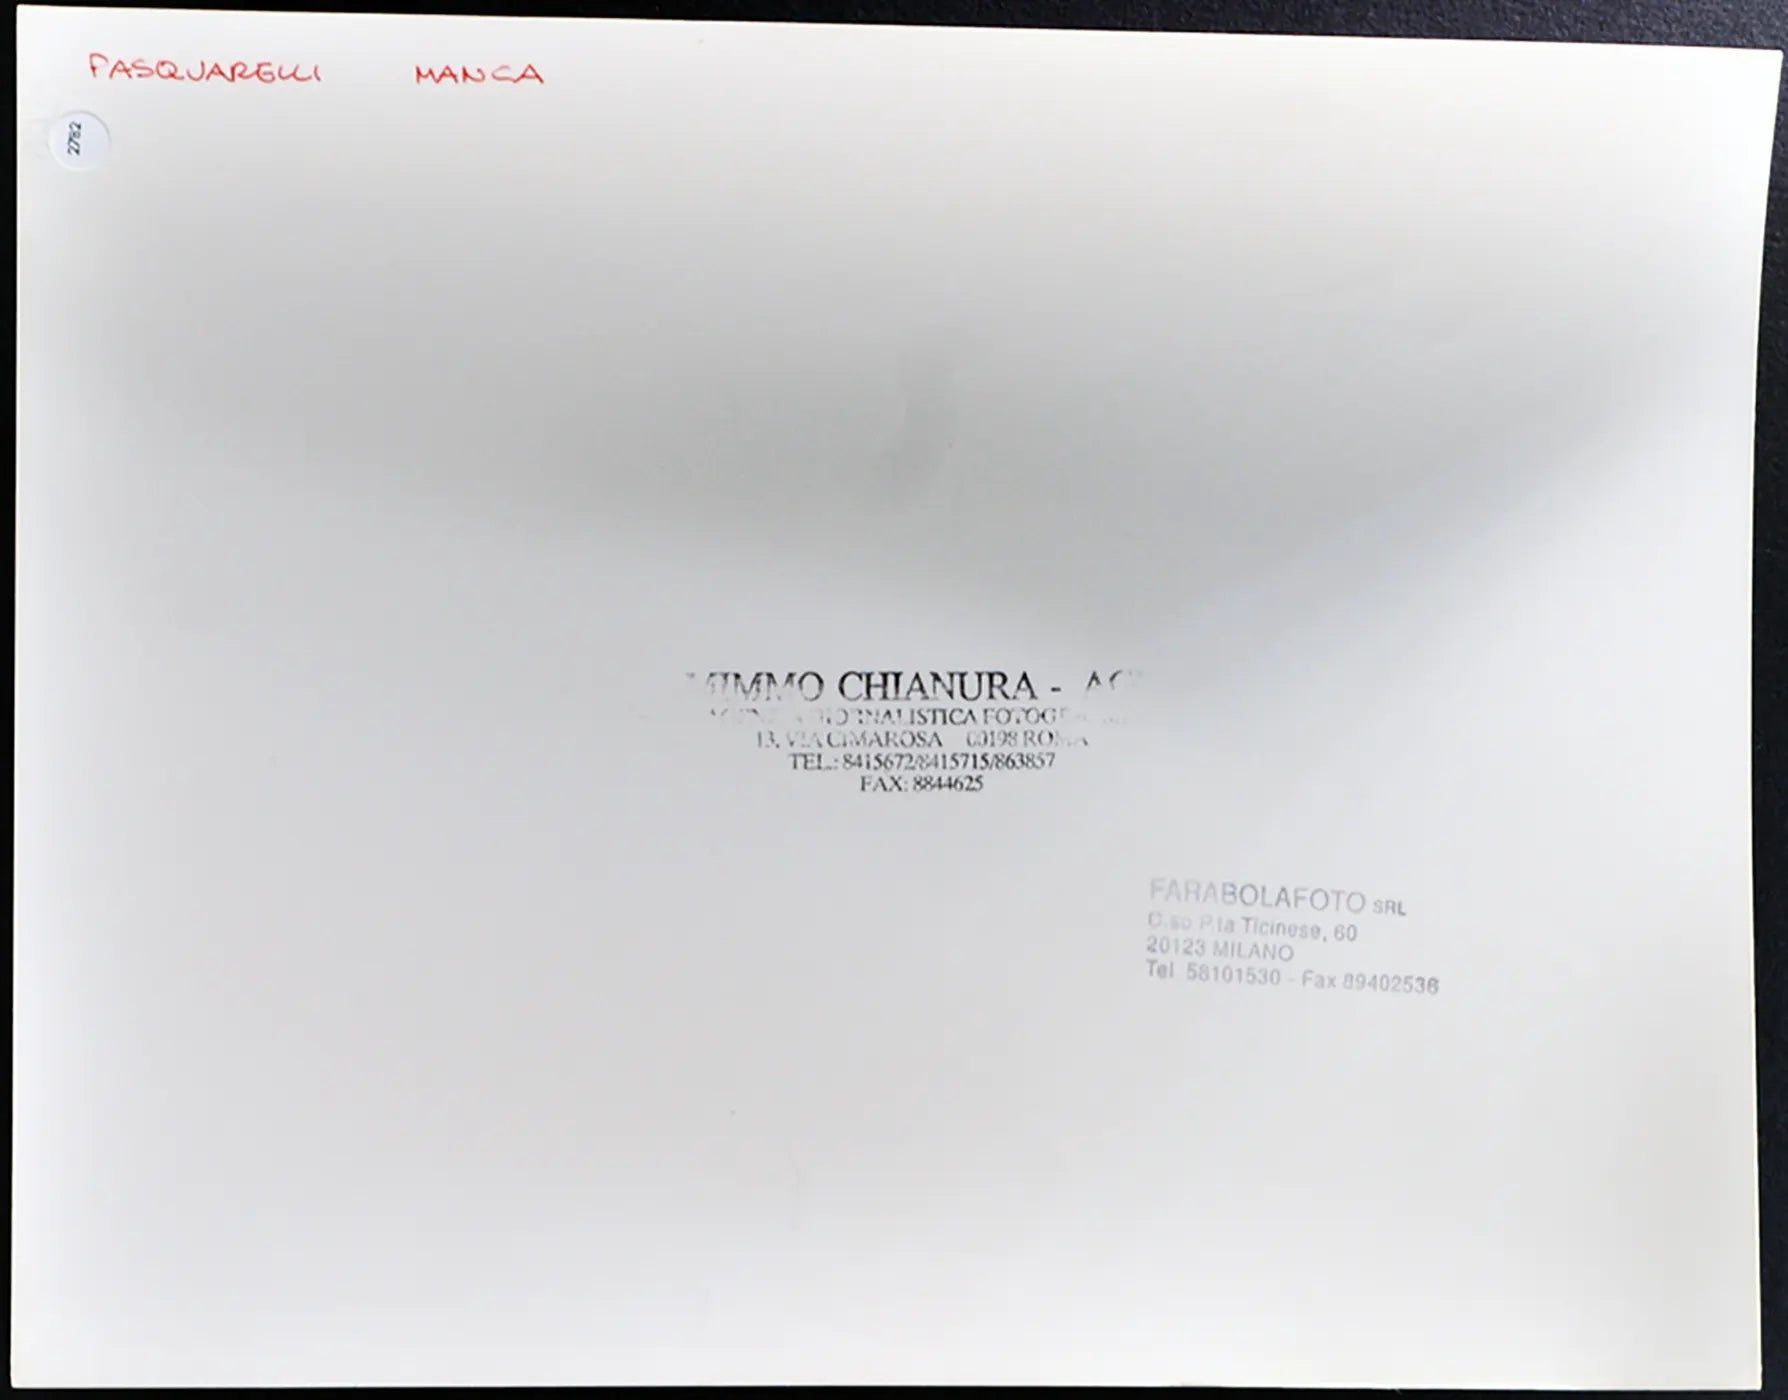 Pasquarelli e Manca anni 90 Ft 2782 - Stampa 24x30 cm - Farabola Stampa ai sali d'argento